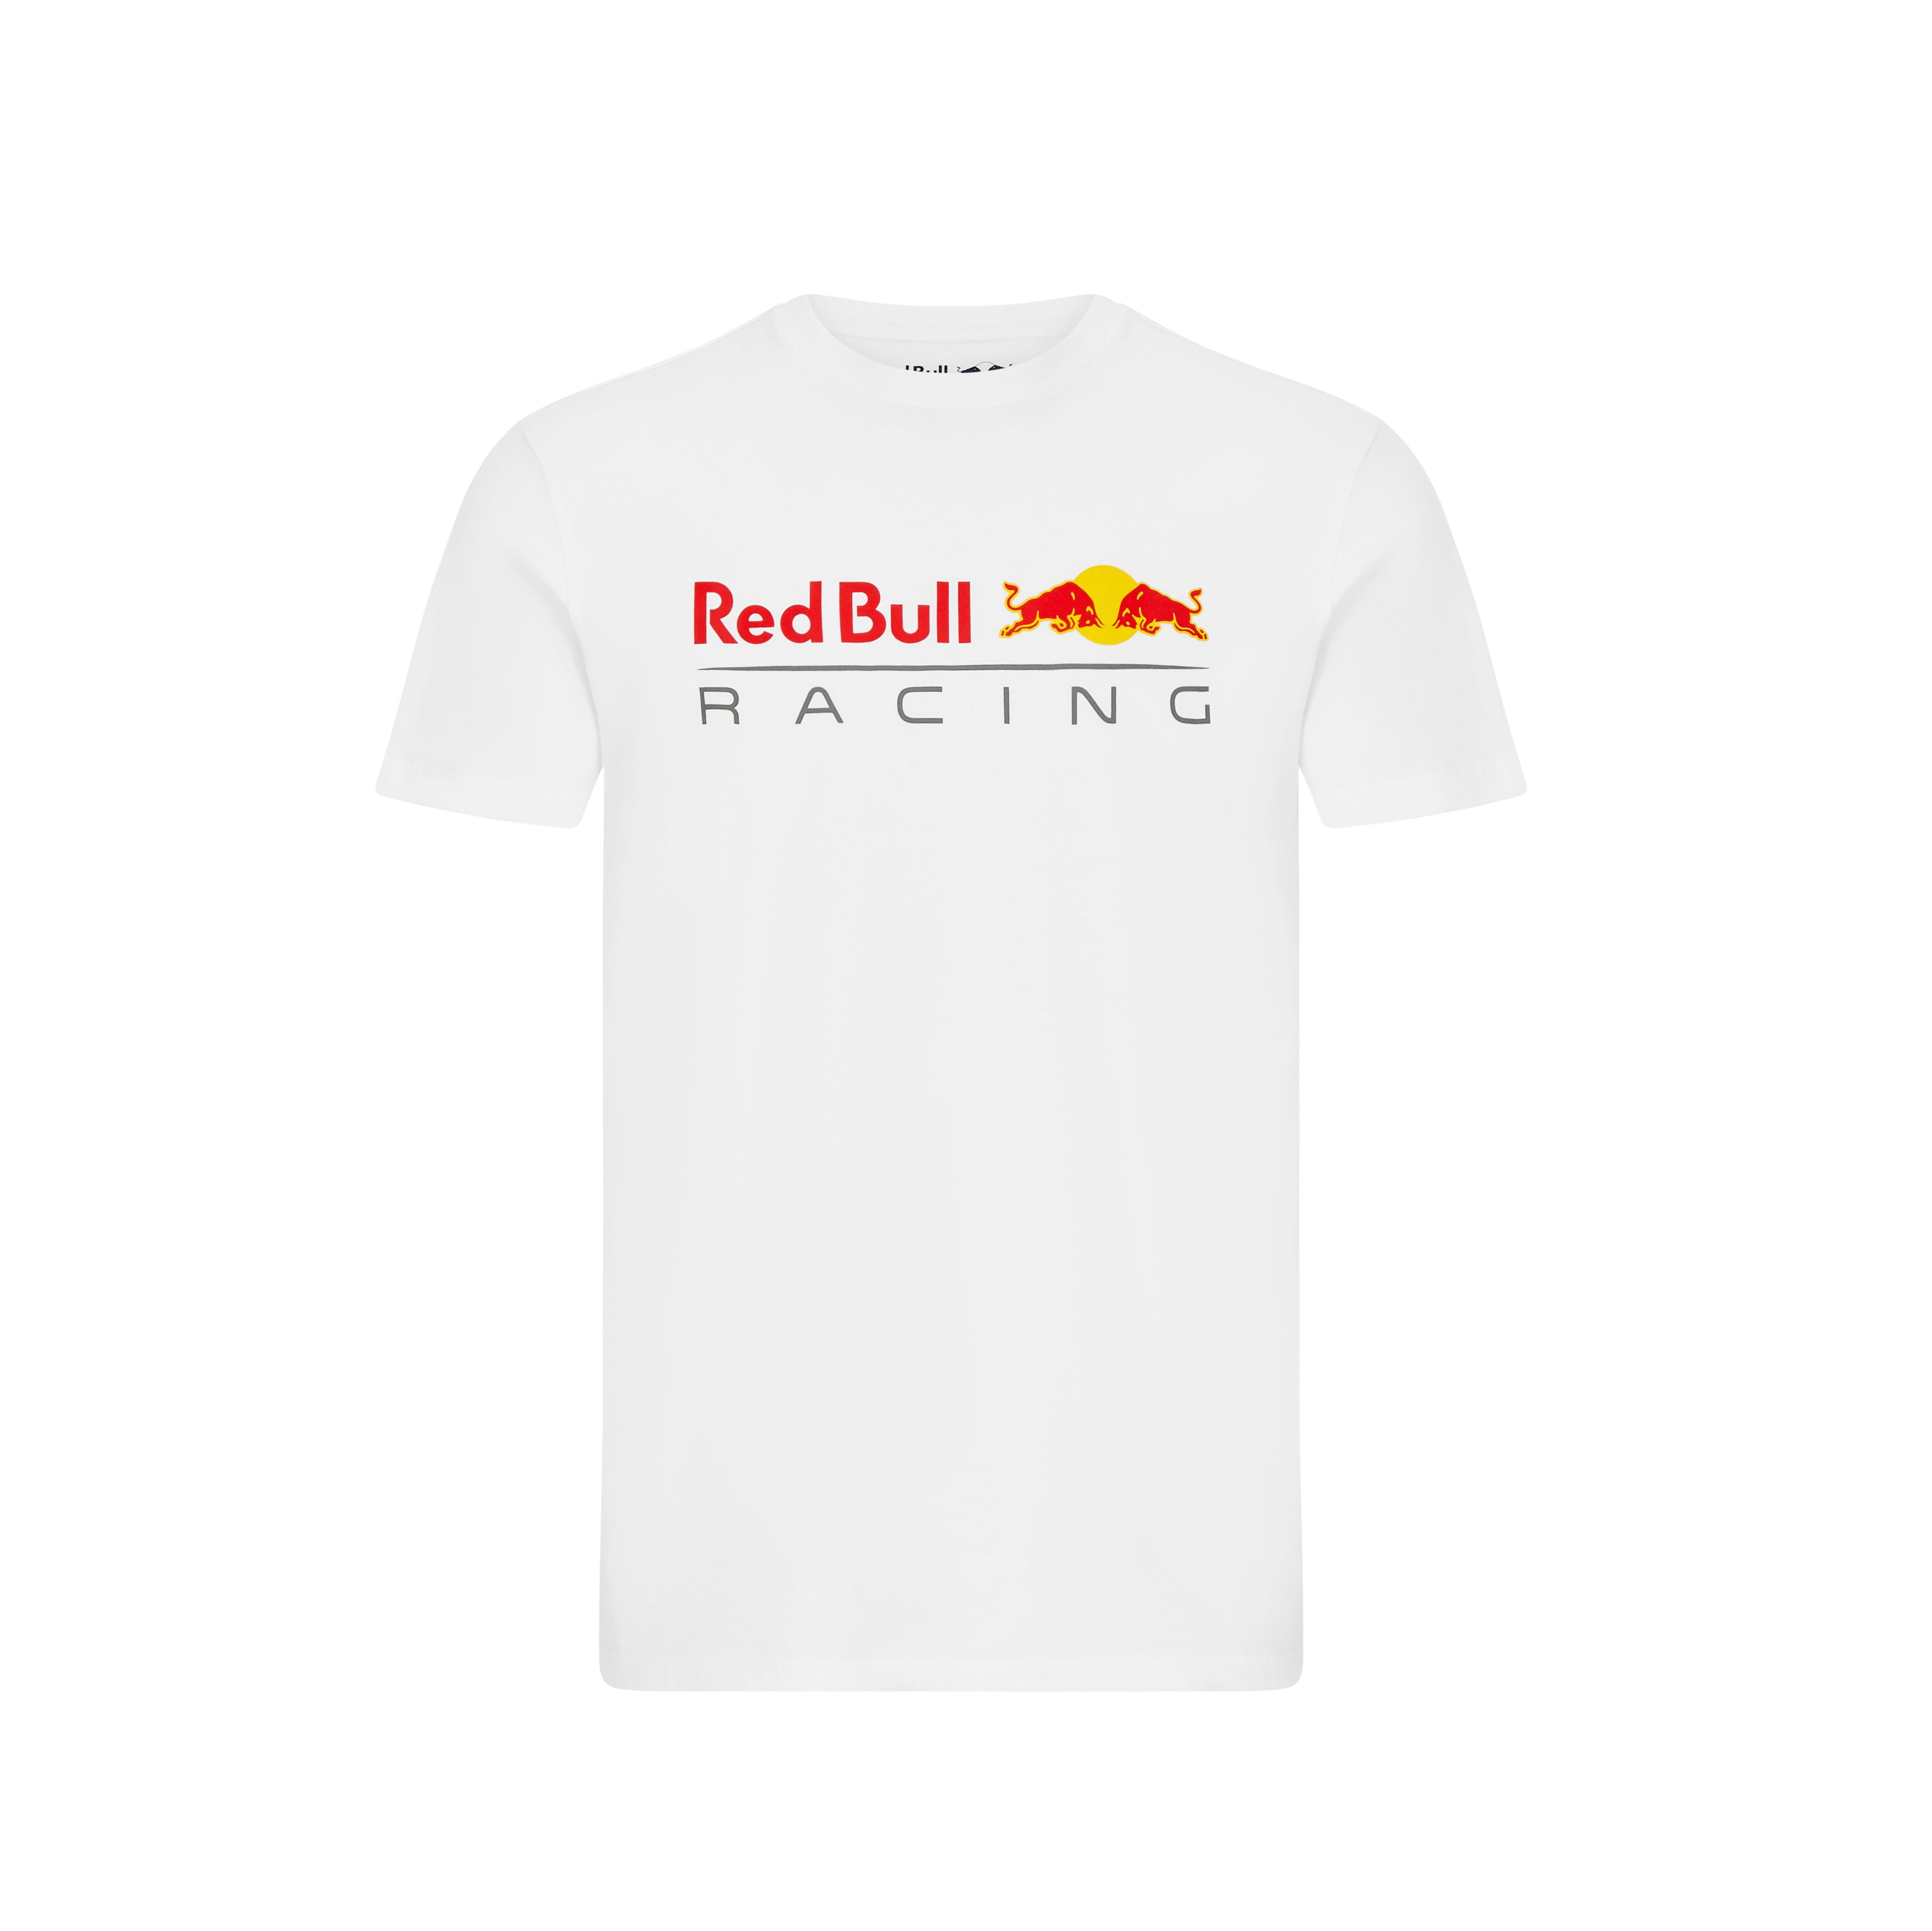 Red Bull Racing Men's Team Tee